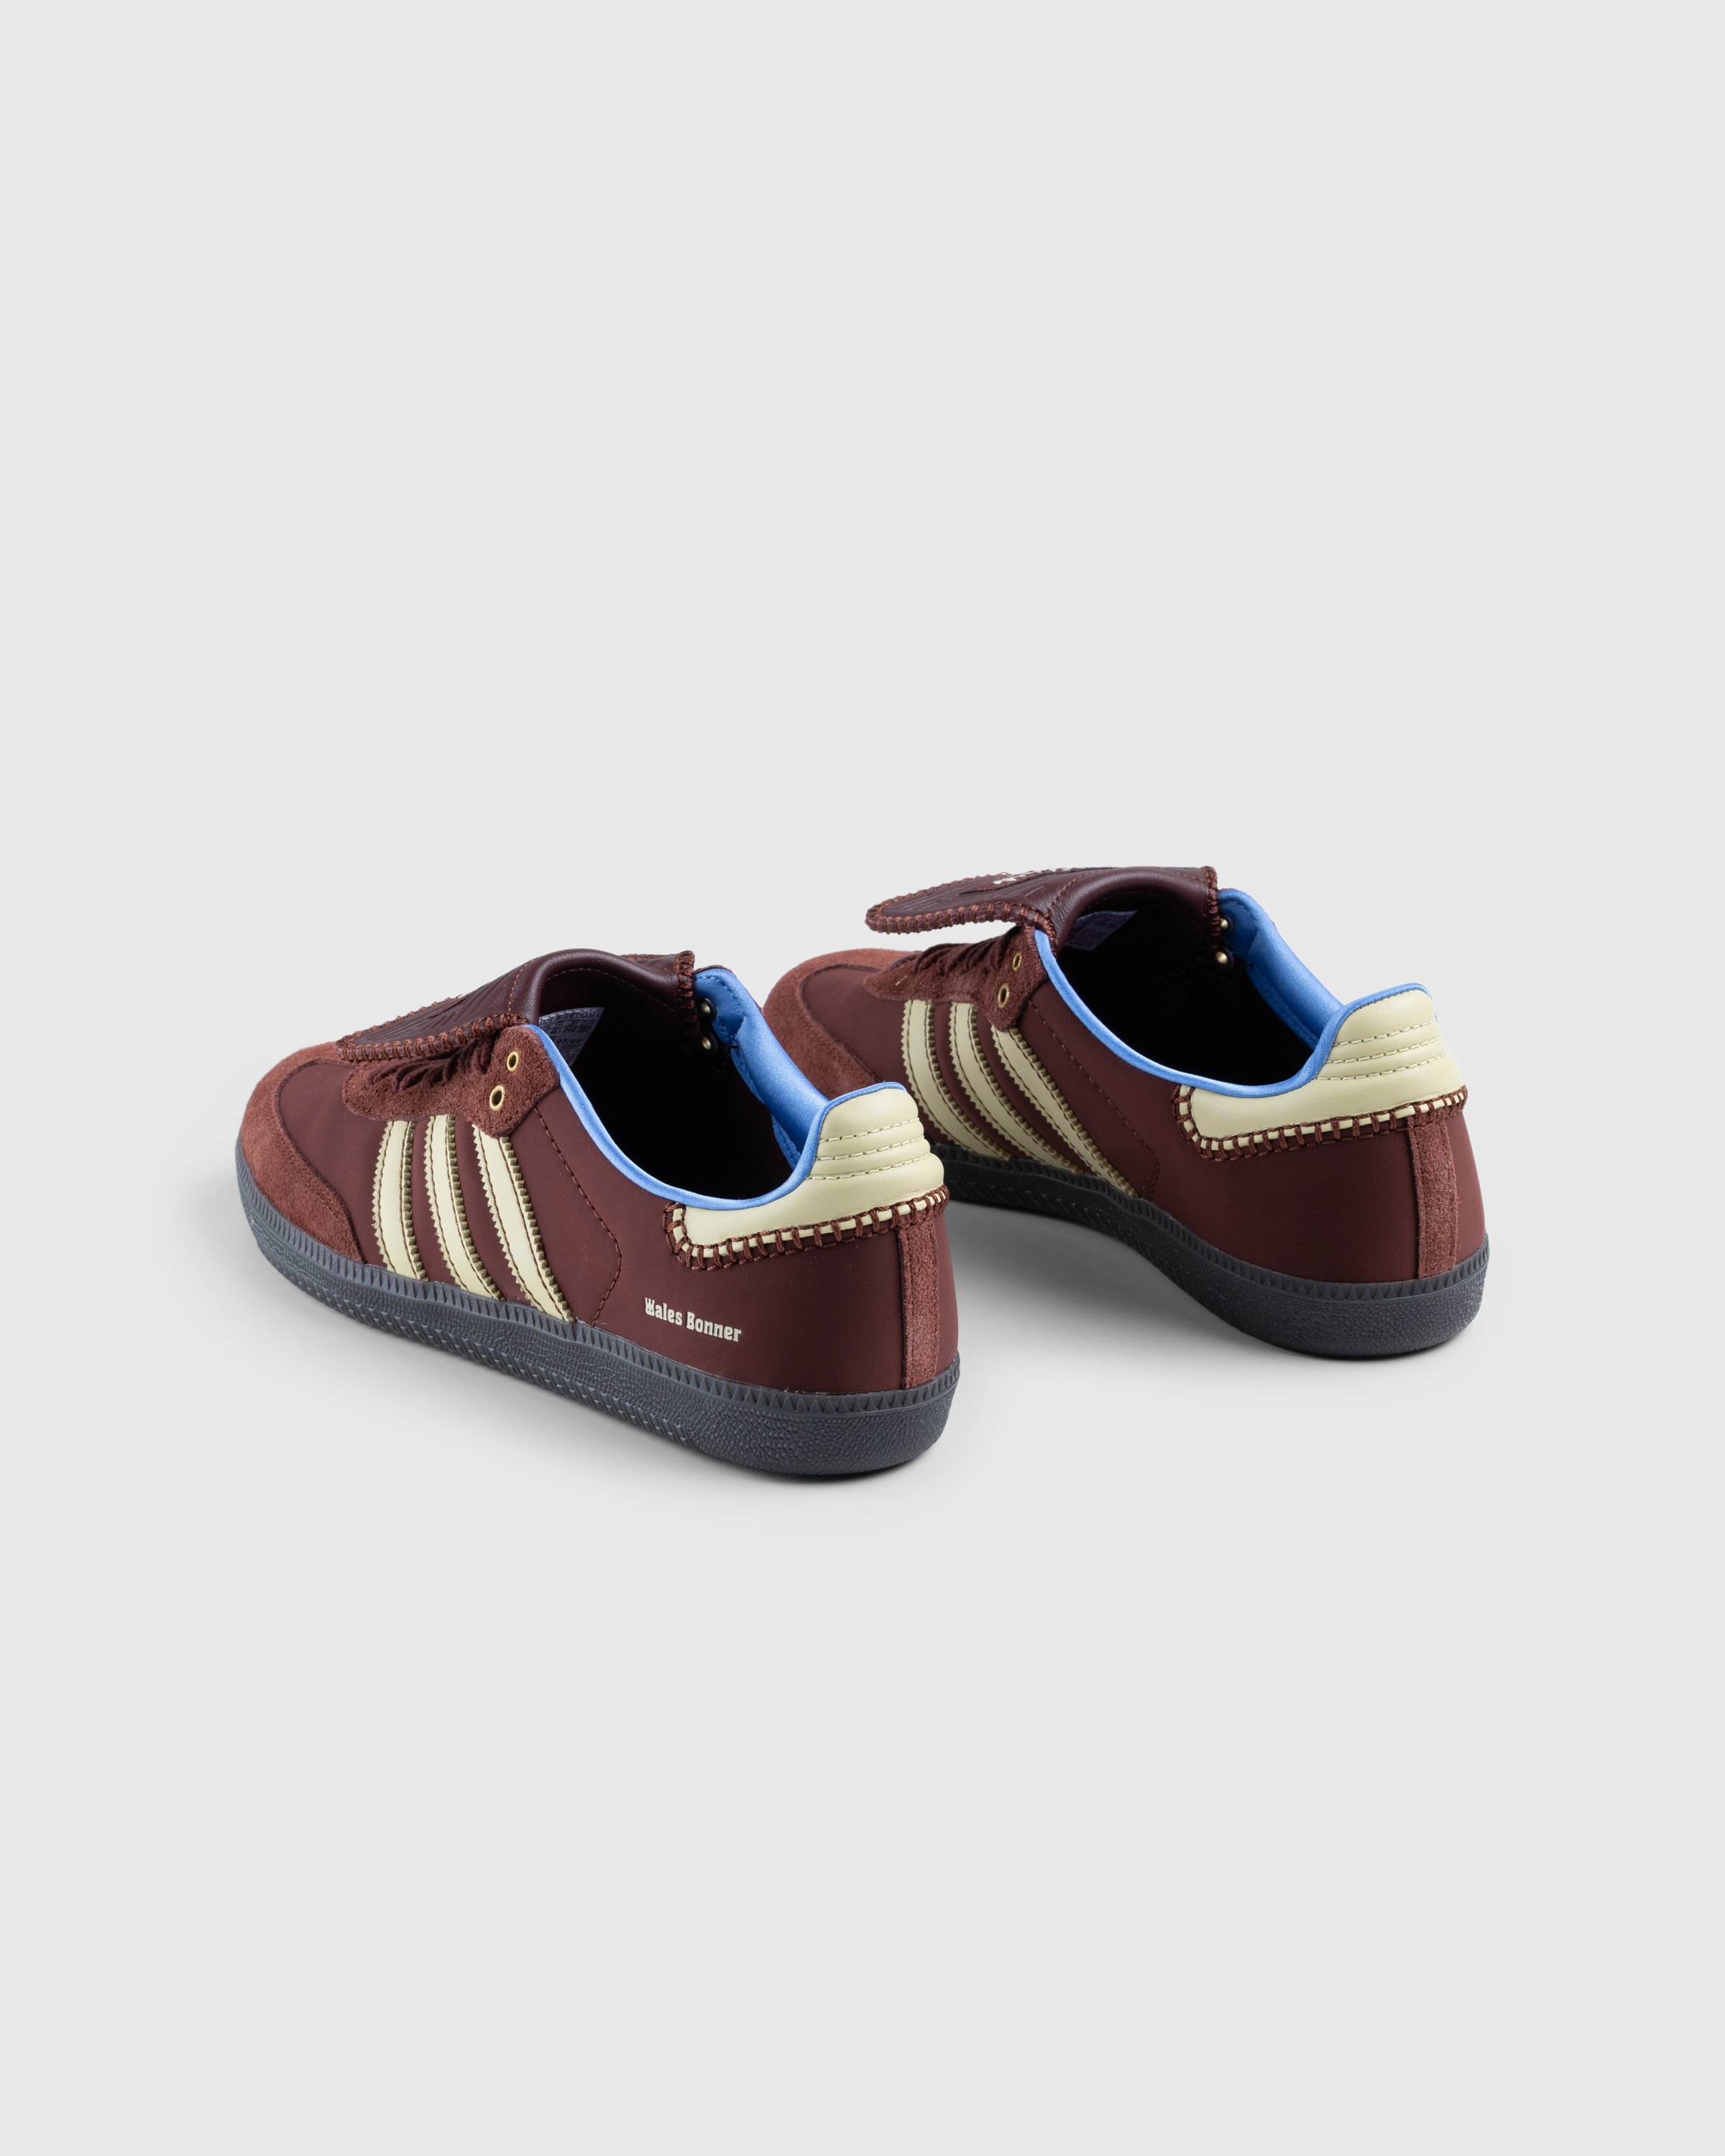 Adidas x Wales Bonner - WB NYLON SAMBA FOXBRN/SANBEI/LUCBLU - Footwear - Brown - Image 4